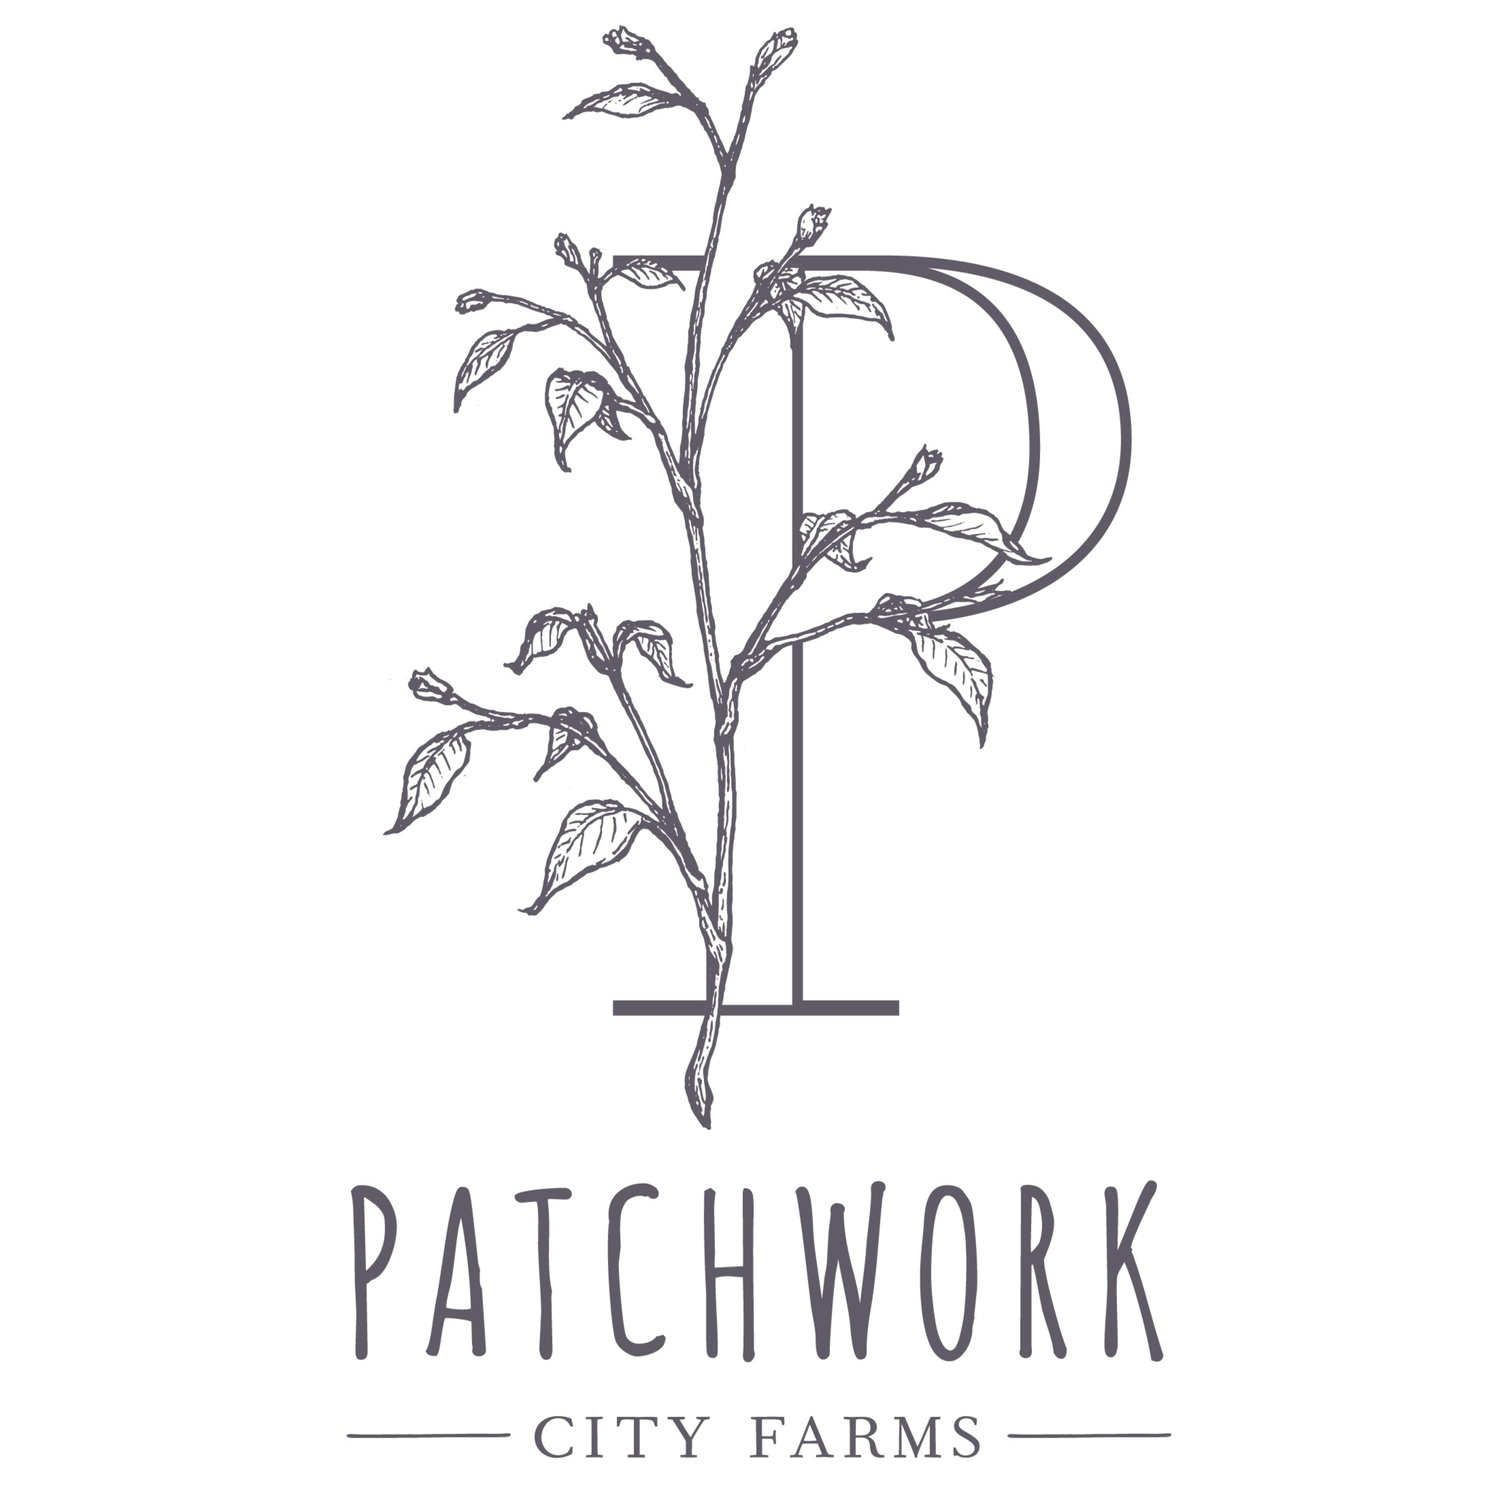 Patchwork City Farms